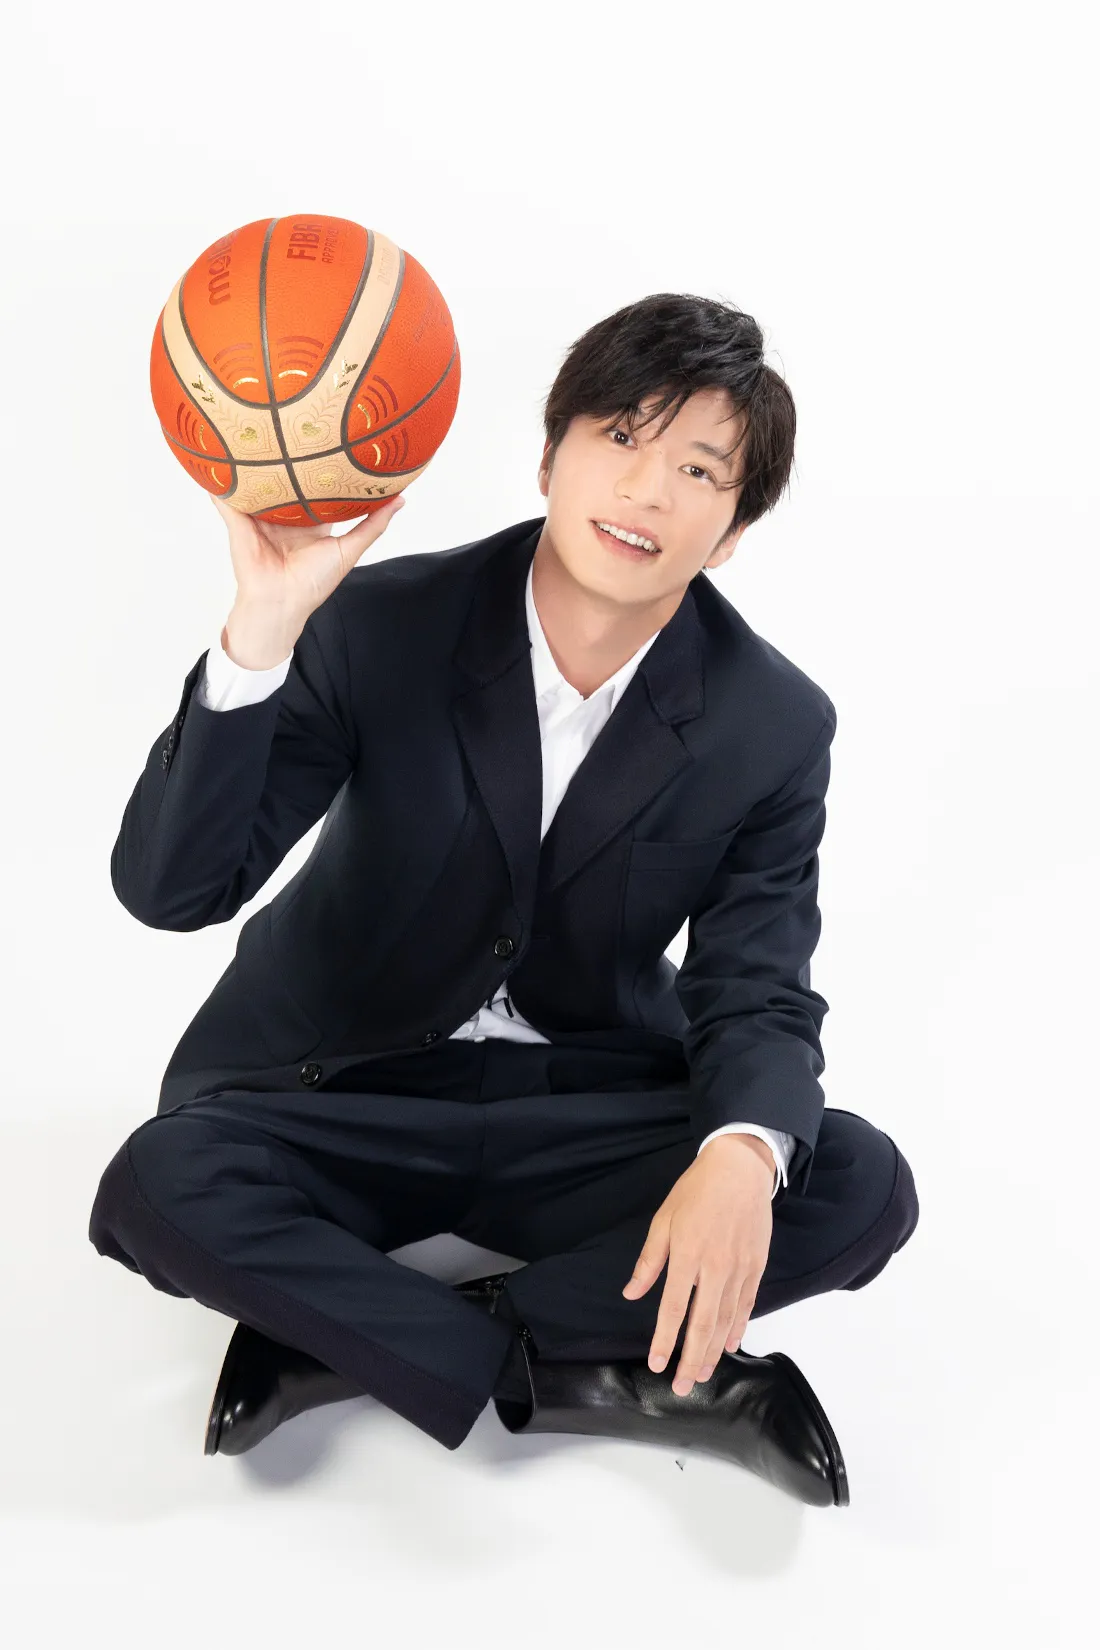 「FIBAバスケットボールワールドカップ2023」の日テレ系メインキャスターを務める田中圭